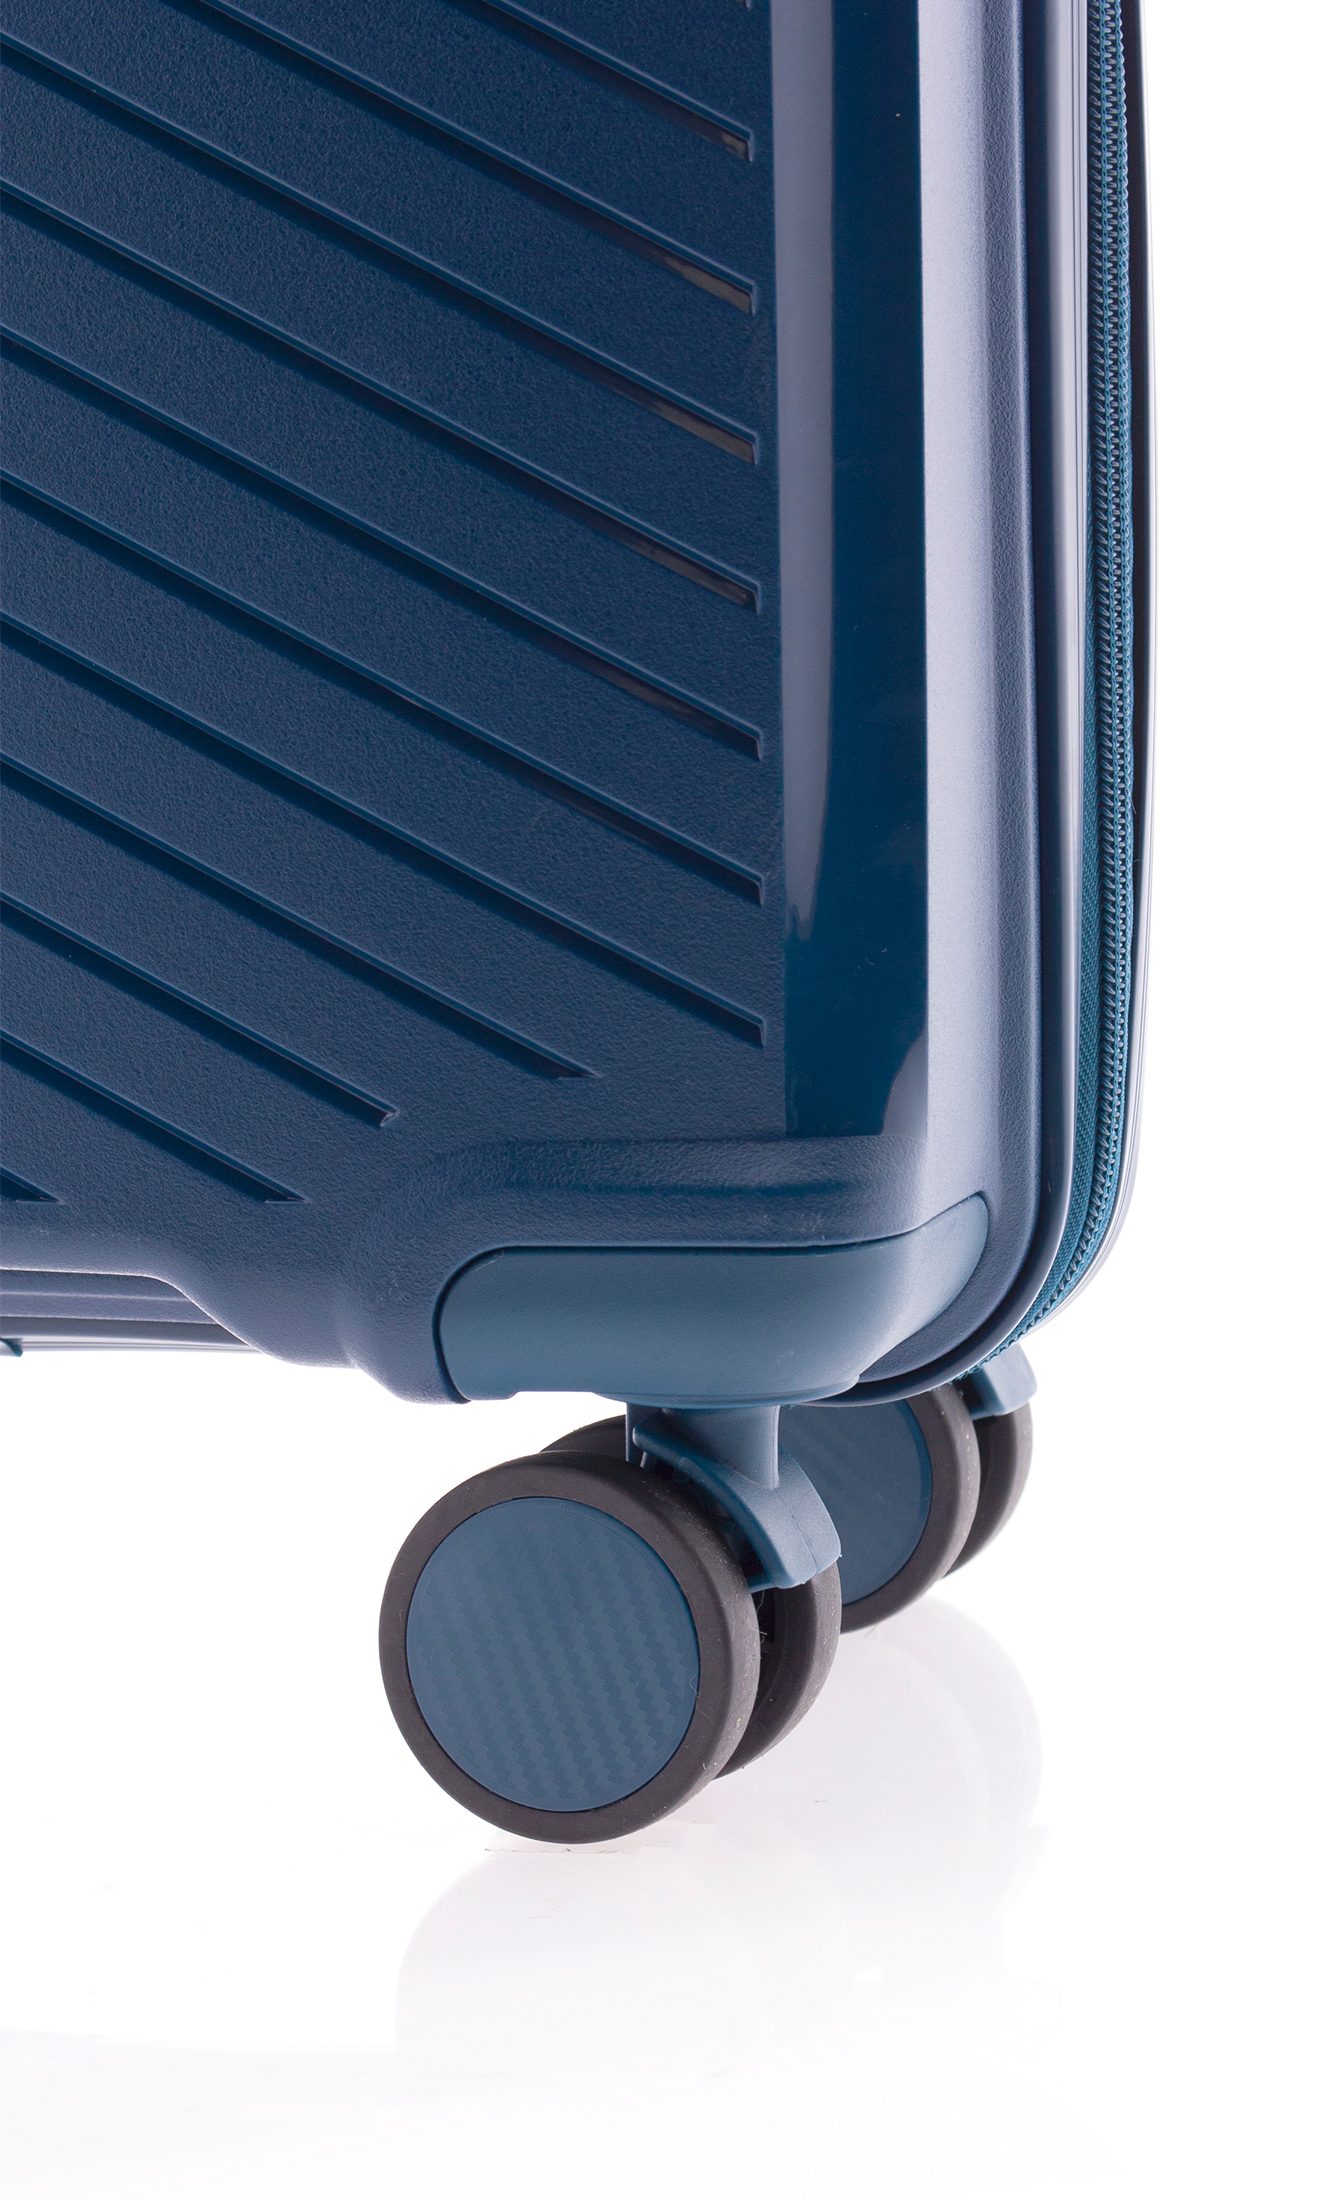 - Hartschalen-Trolley od. 4 cm, 75 GLADIATOR Polycarbonat, XL blau Koffer limette TSA-Schloss, rot, Rollen, schwarz,